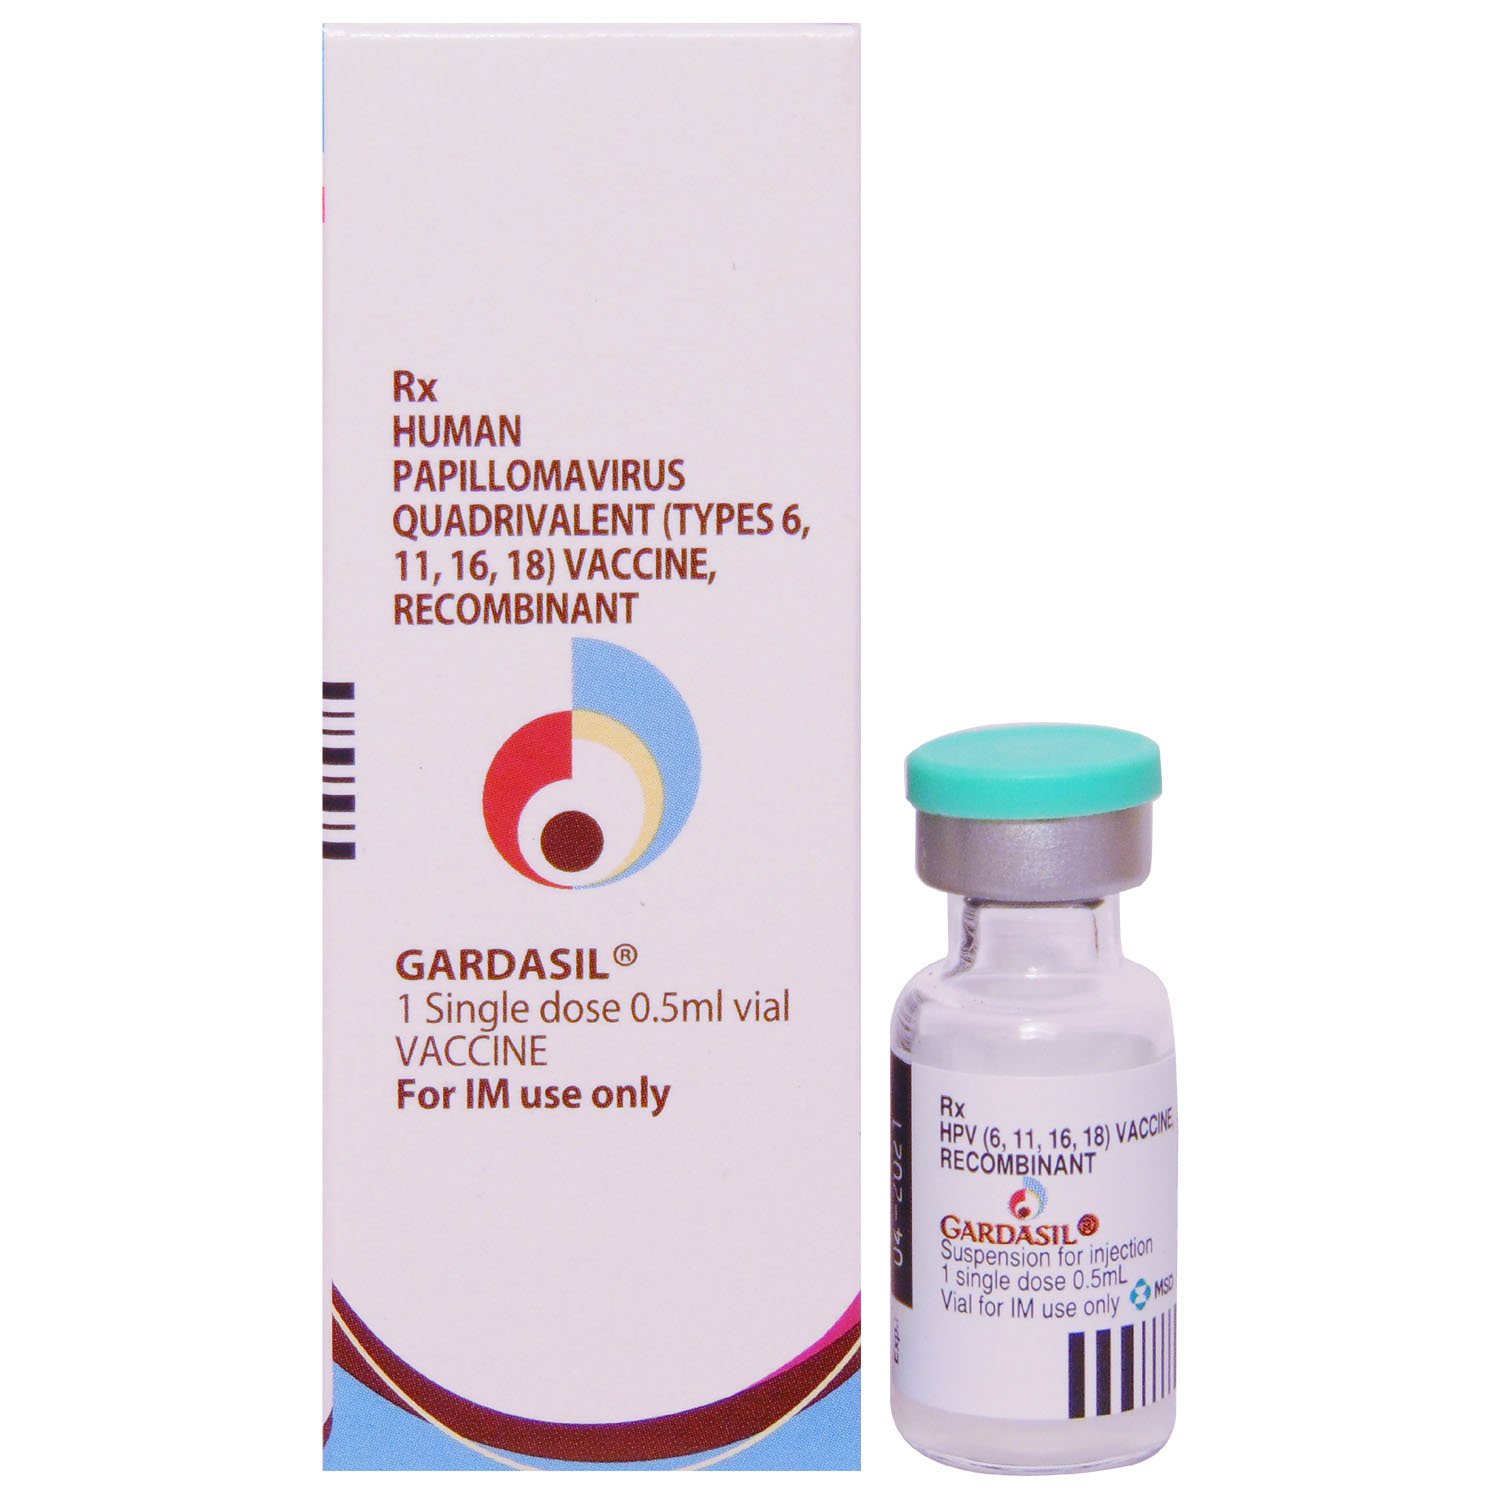 Human papillomavirus quadrivalent vaccine, Gardasil human papillomavirus quadrivalent